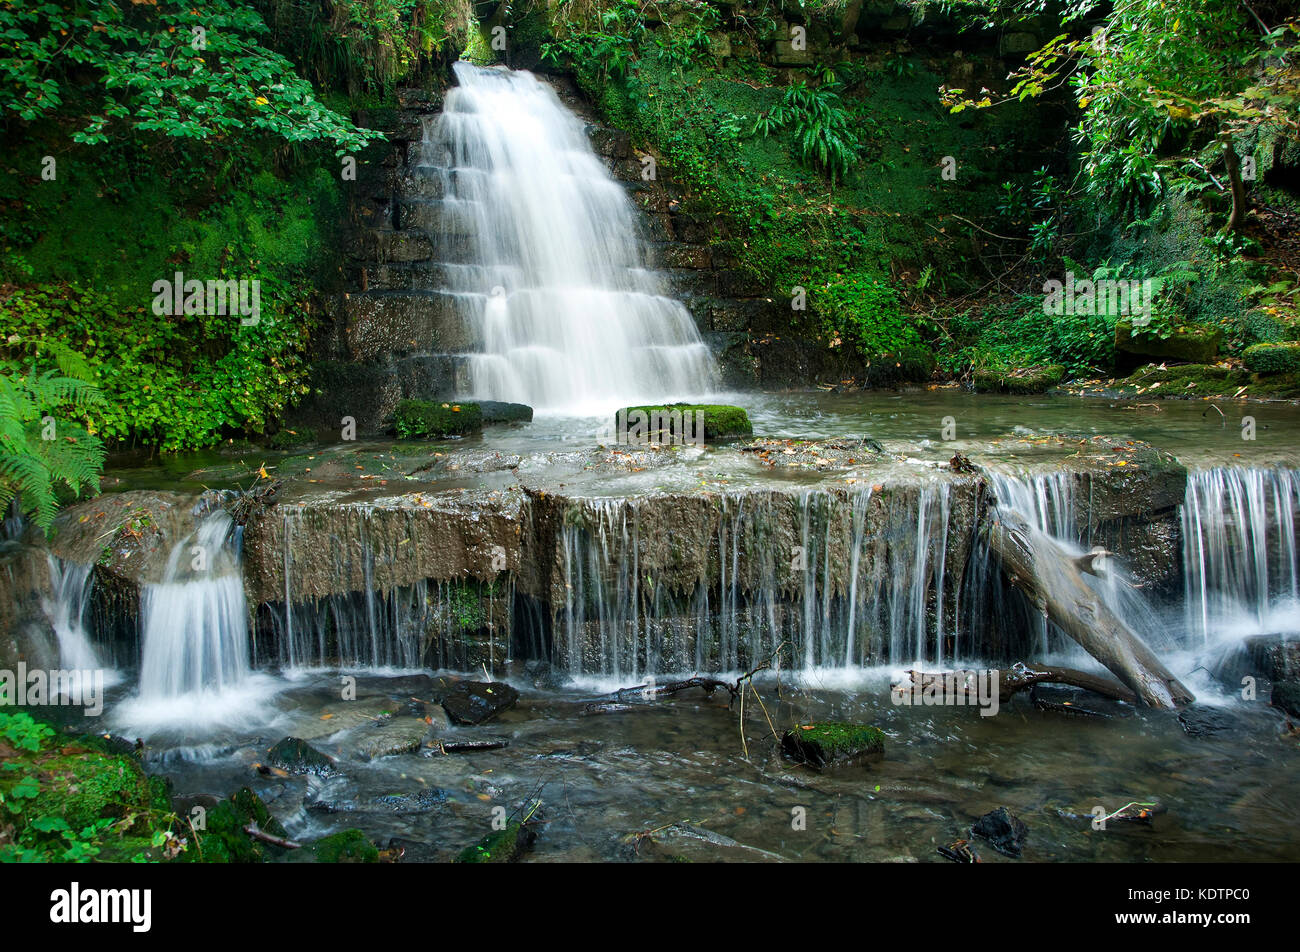 A small waterfall at Rouken Glen Park, Giffnock. Stock Photo